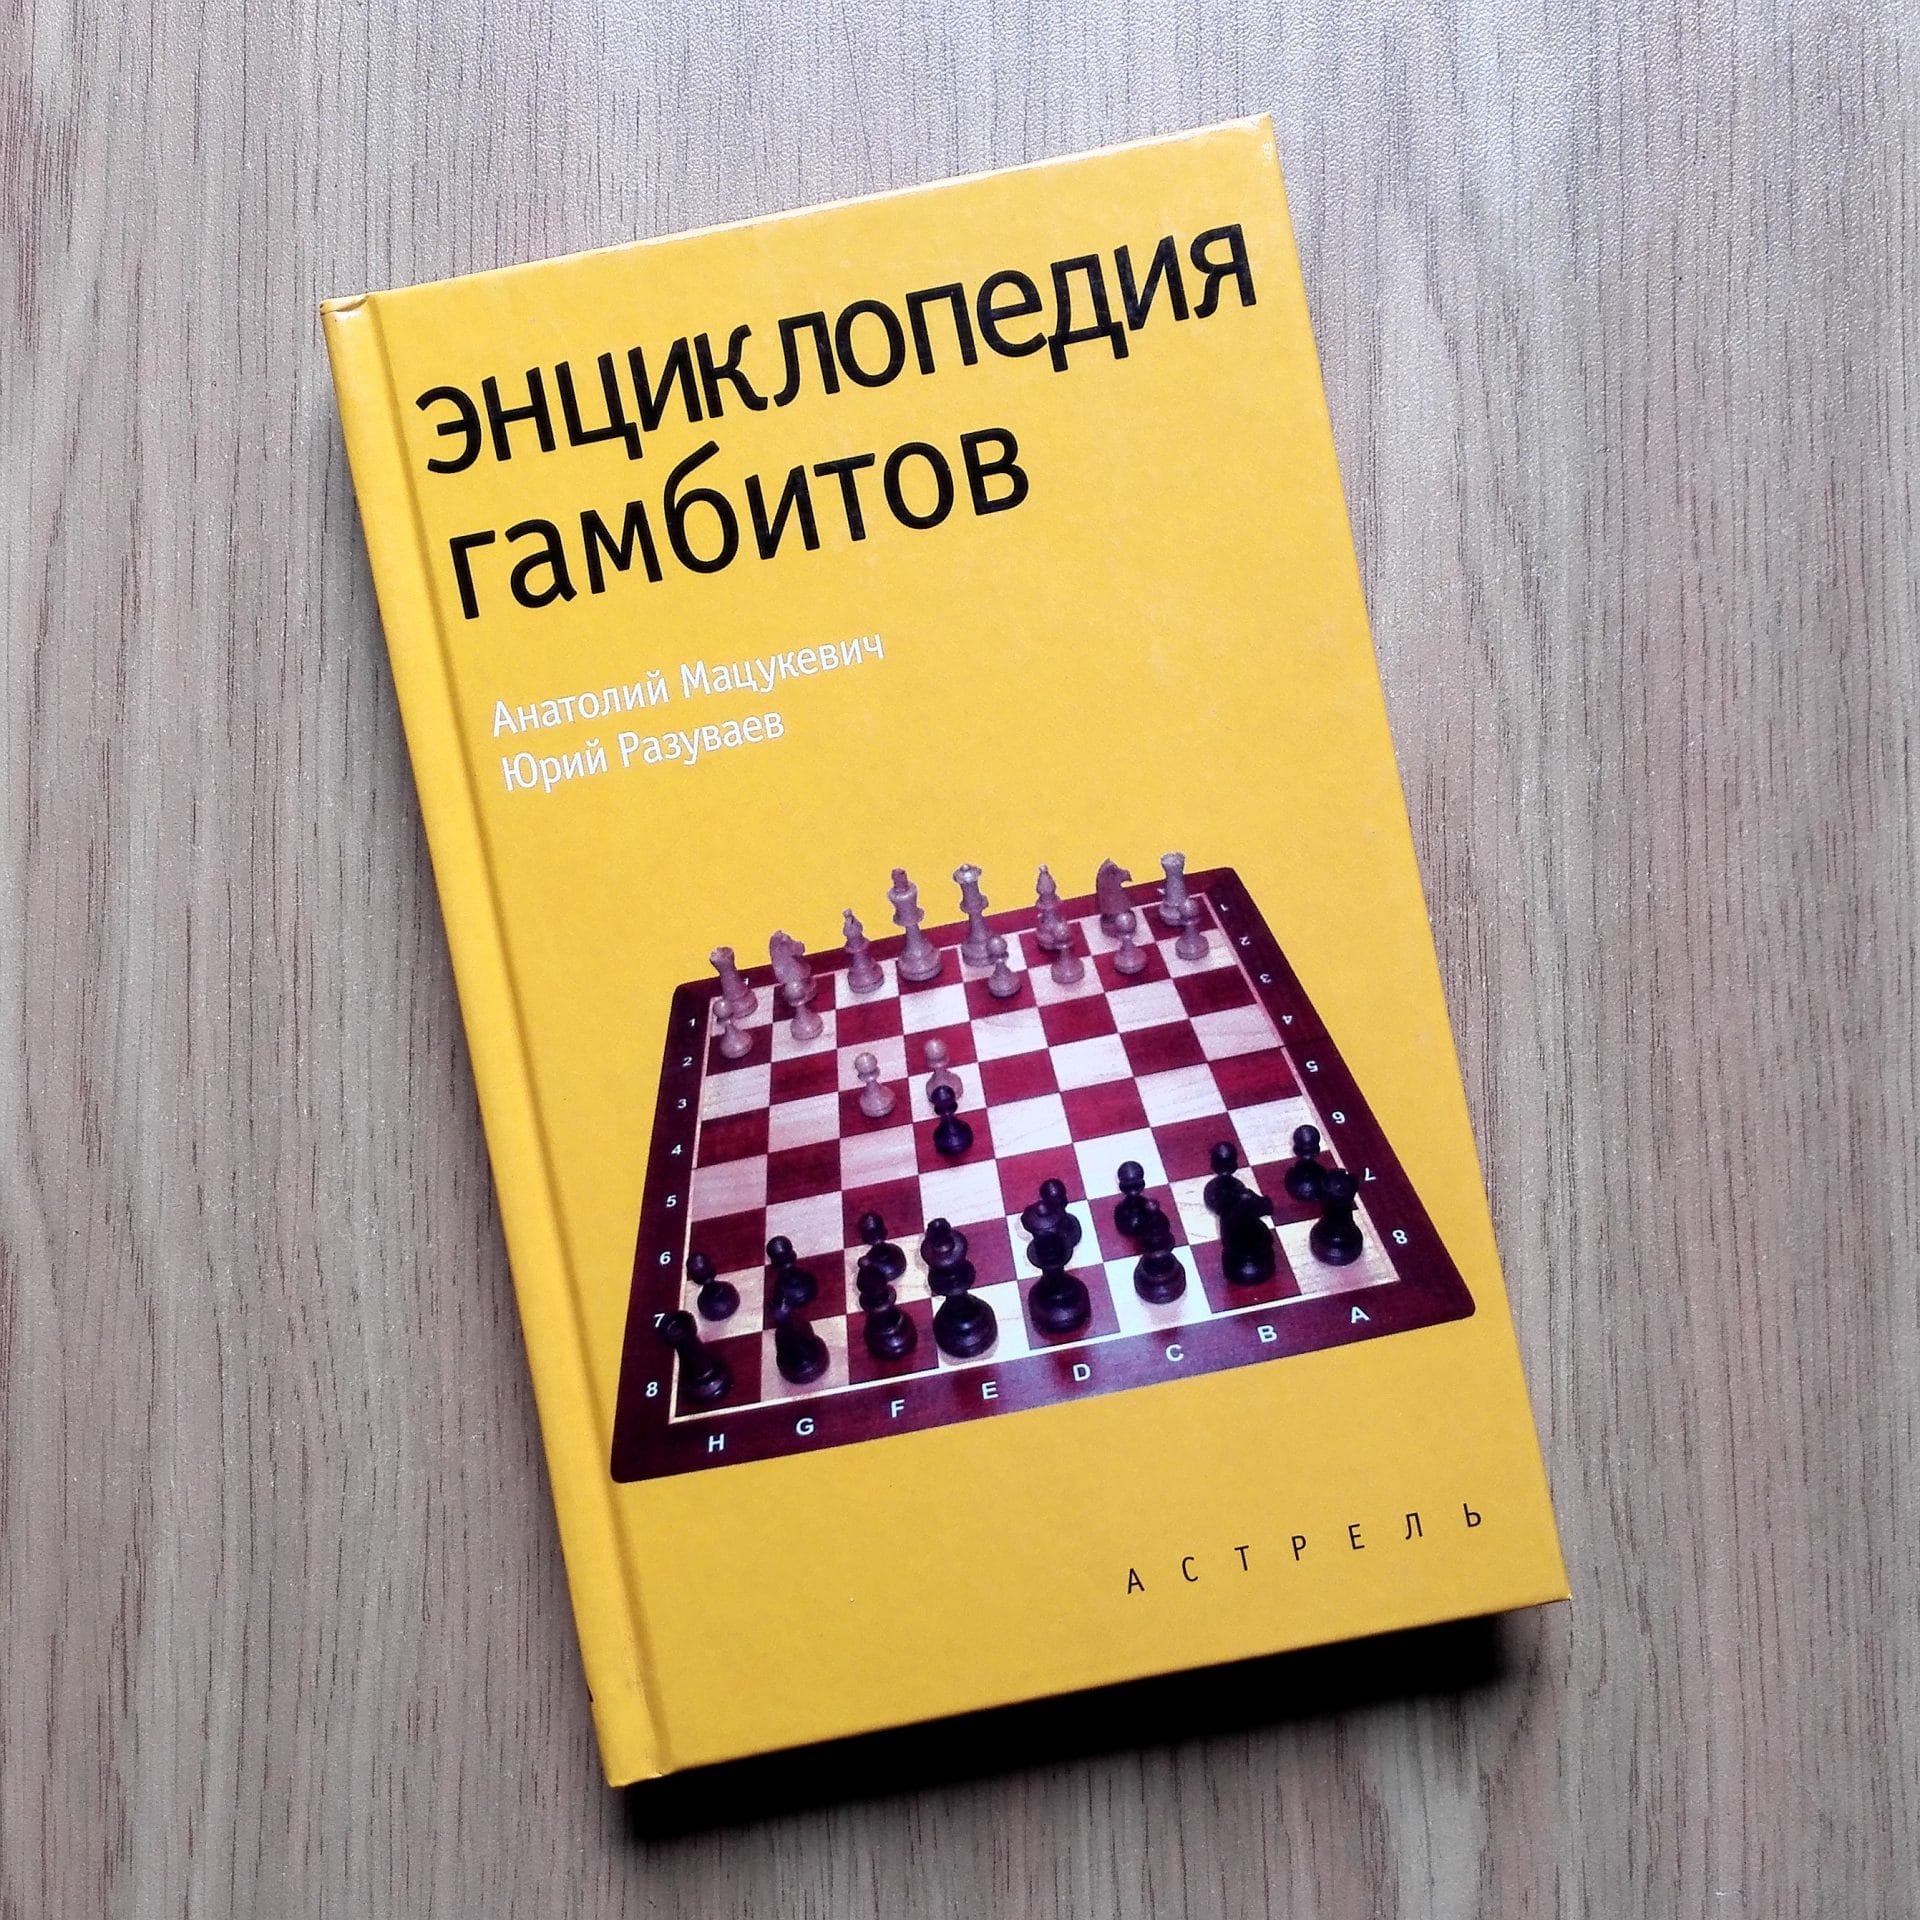 Encyclopedia of Chess Gambits. Chess Game Tutorial. Soviet Chess